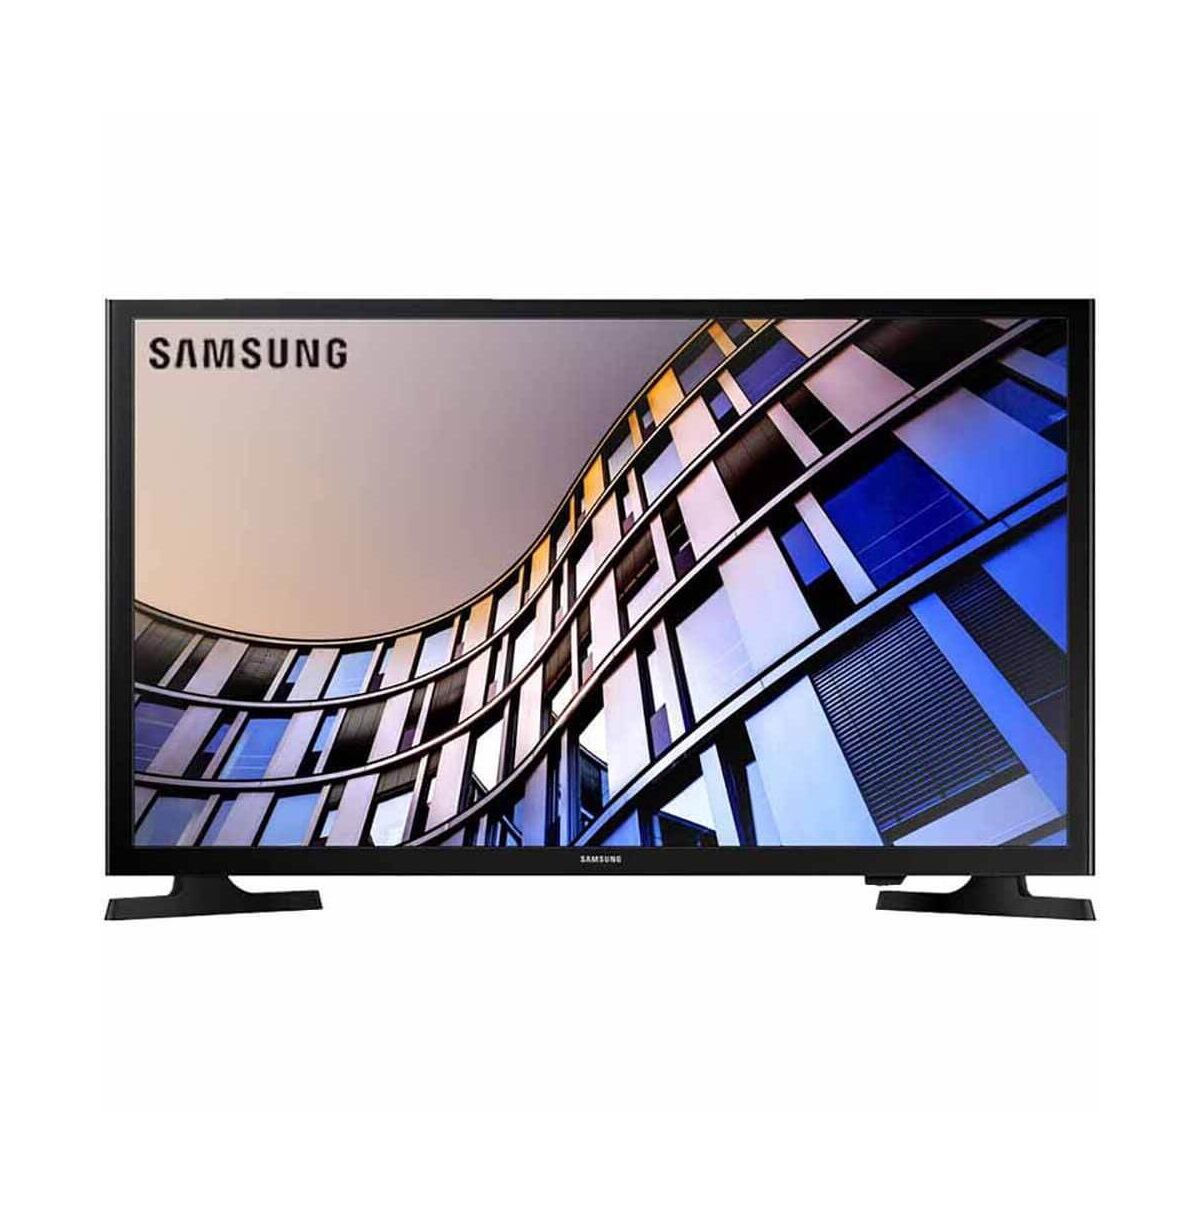 Samsung 32 inch M4500 Hd Smart Tv - UN32M4500 - Black